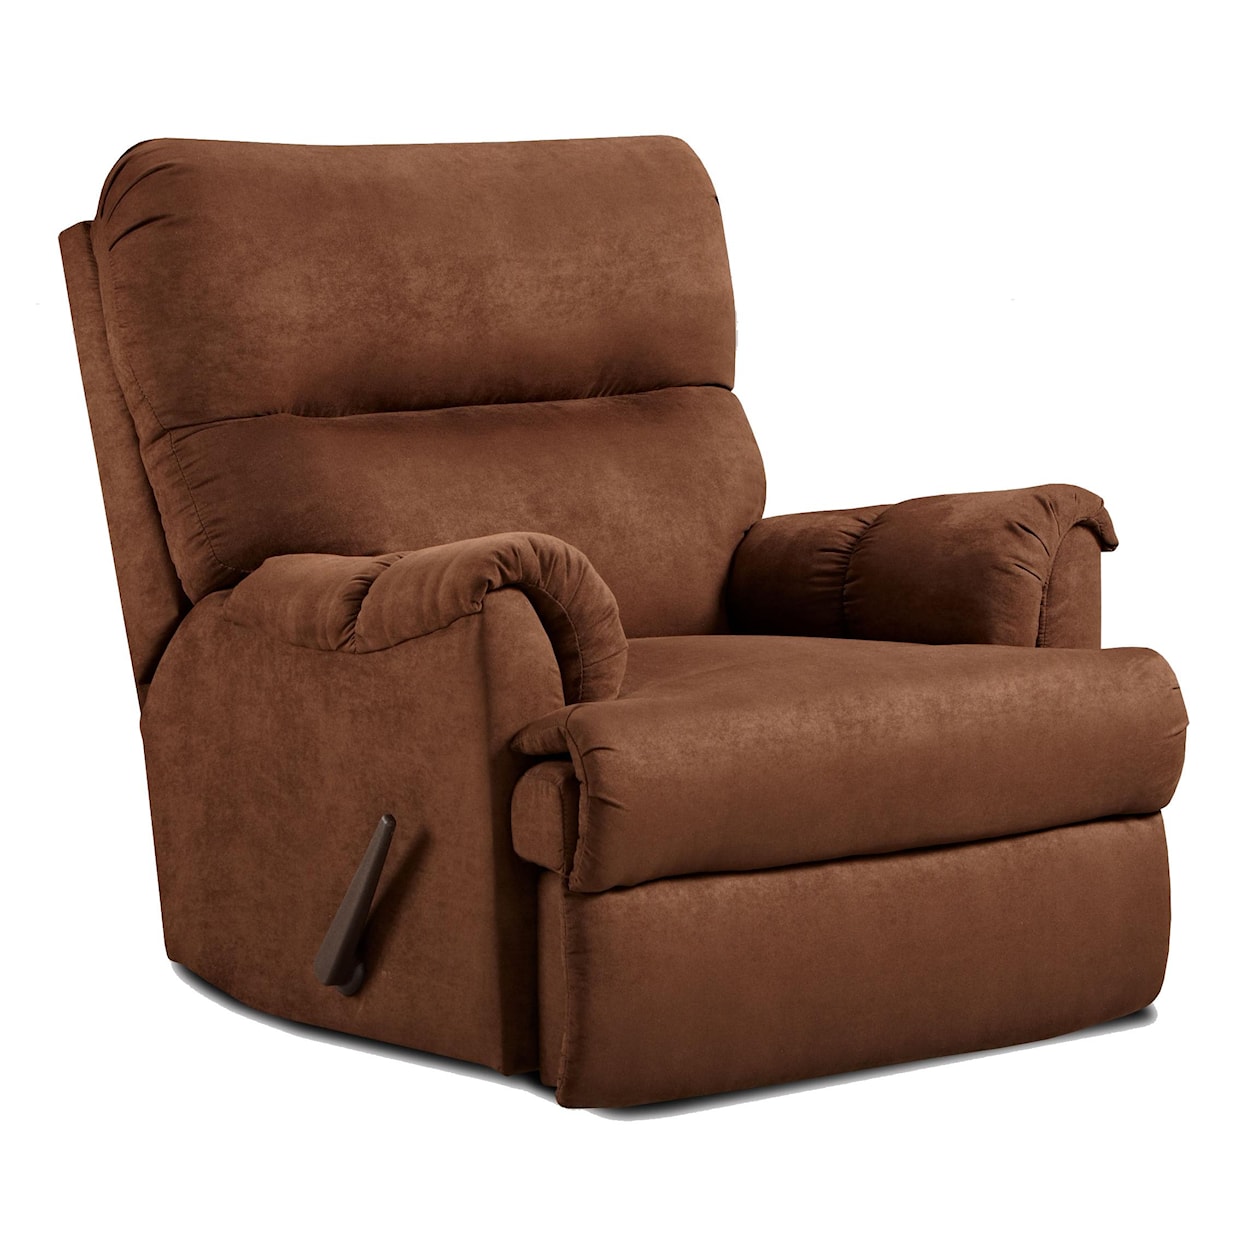 Affordable Furniture 2155 ARUBA CHOCOLATE RECLINER |